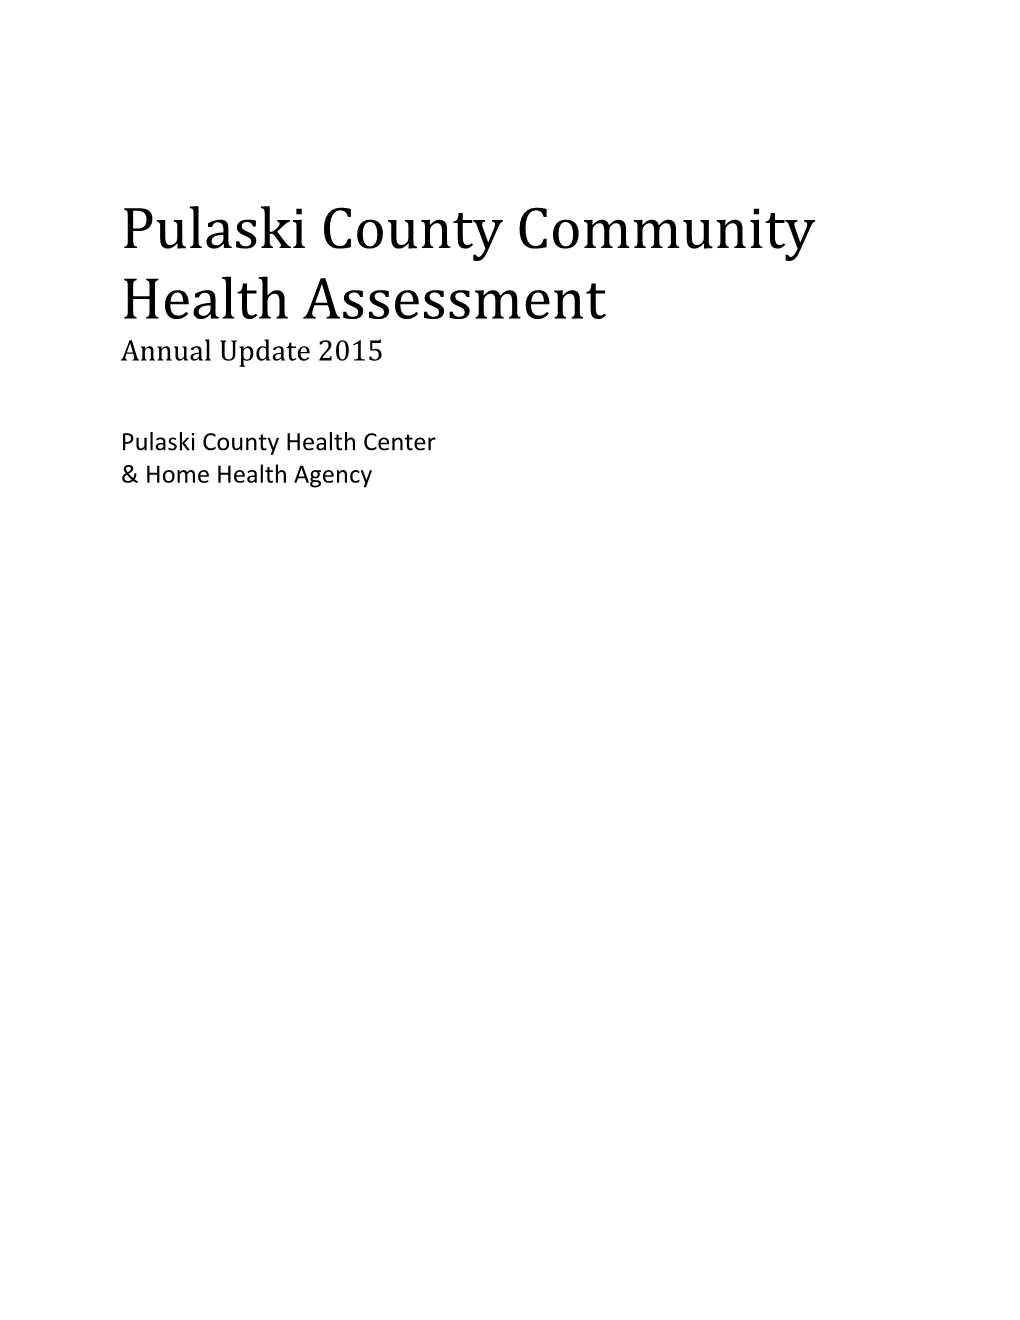 Pulaski County Community Health Assessment